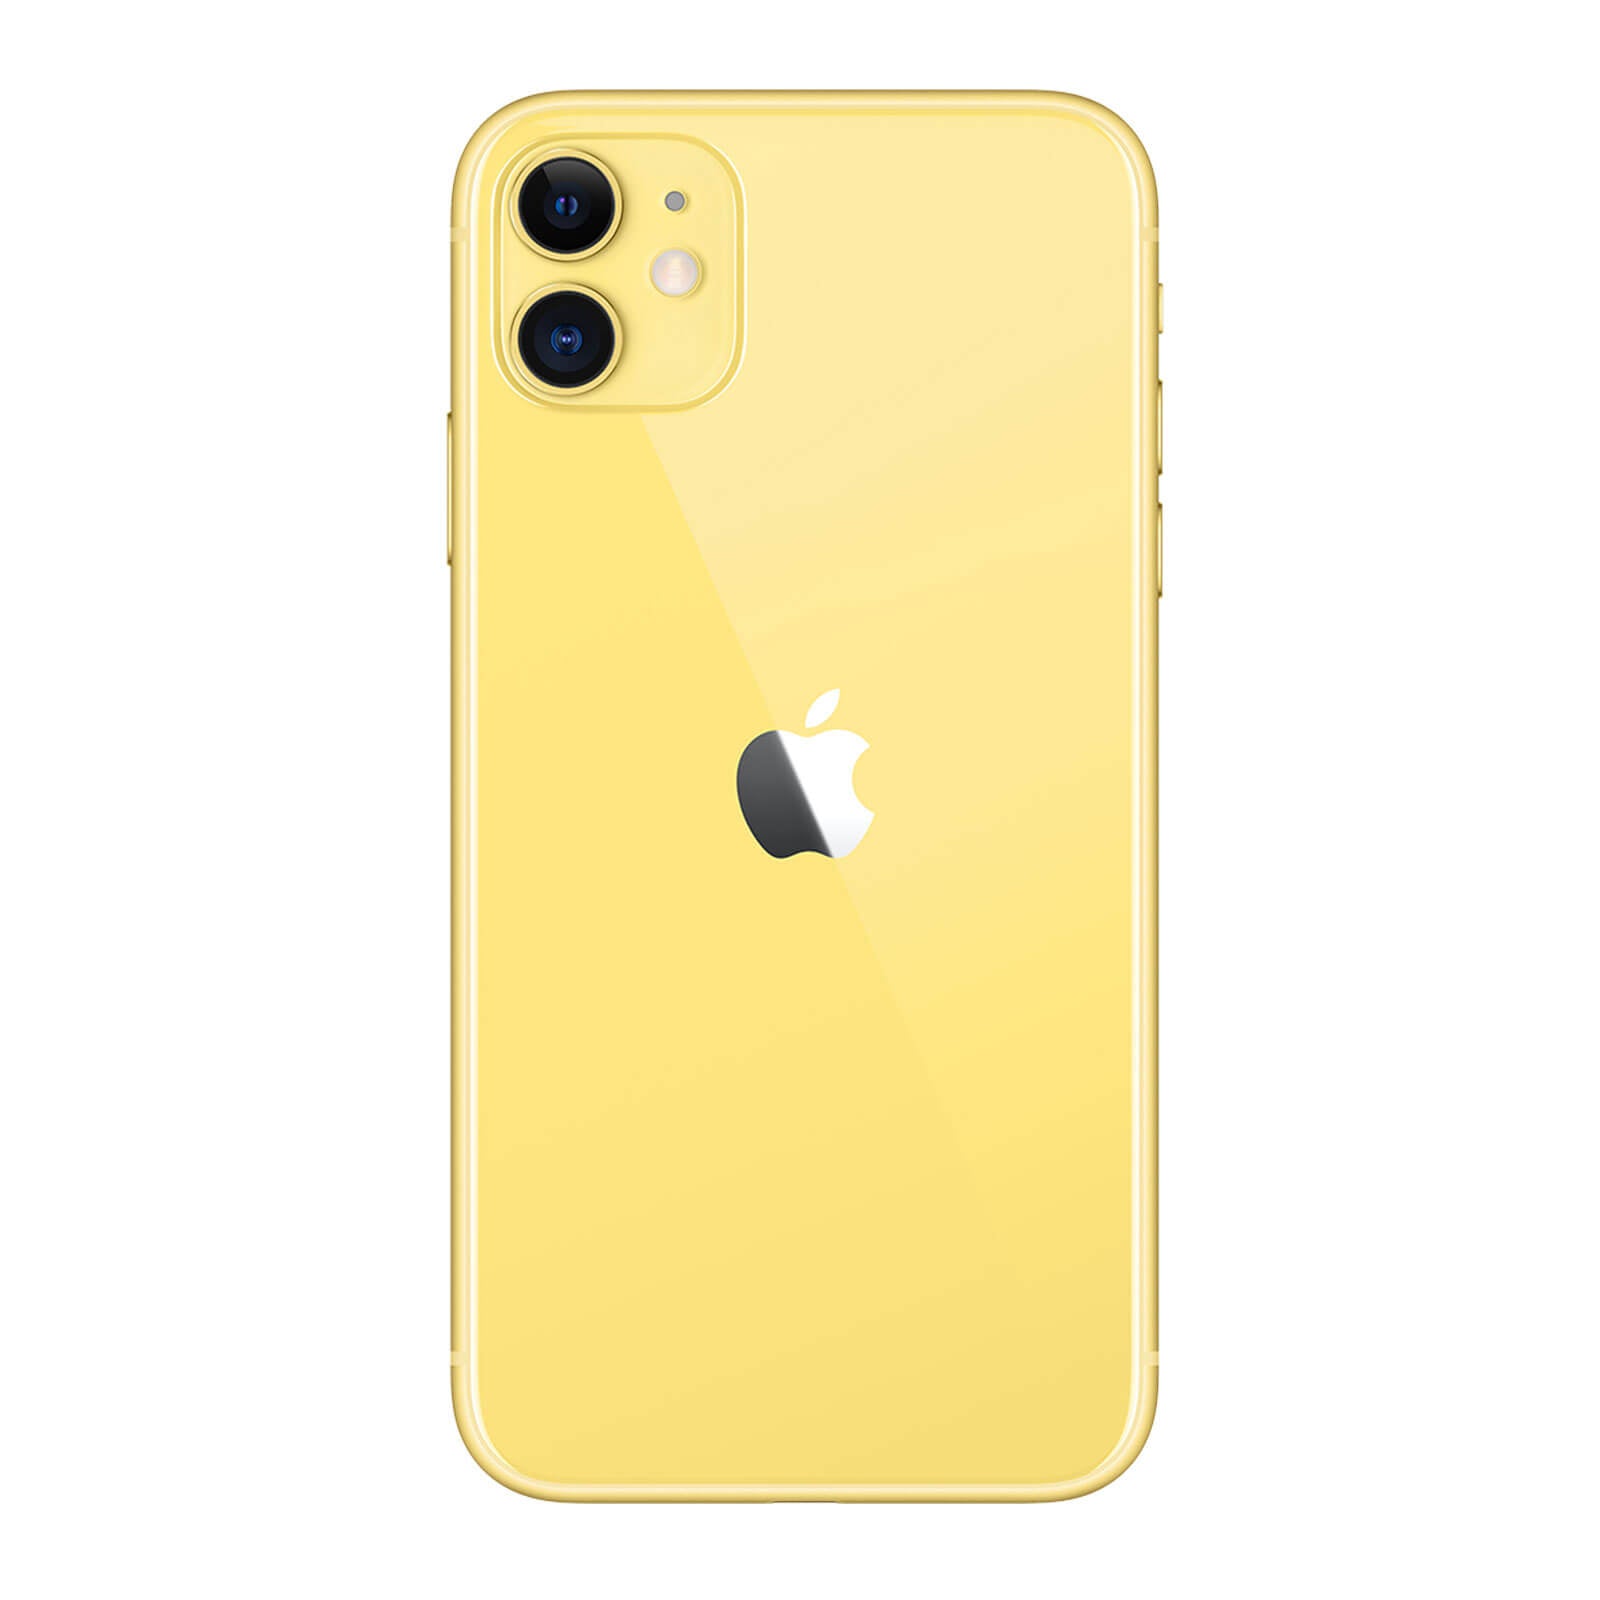 Apple iPhone 11 64GB Yellow Good - AT&T